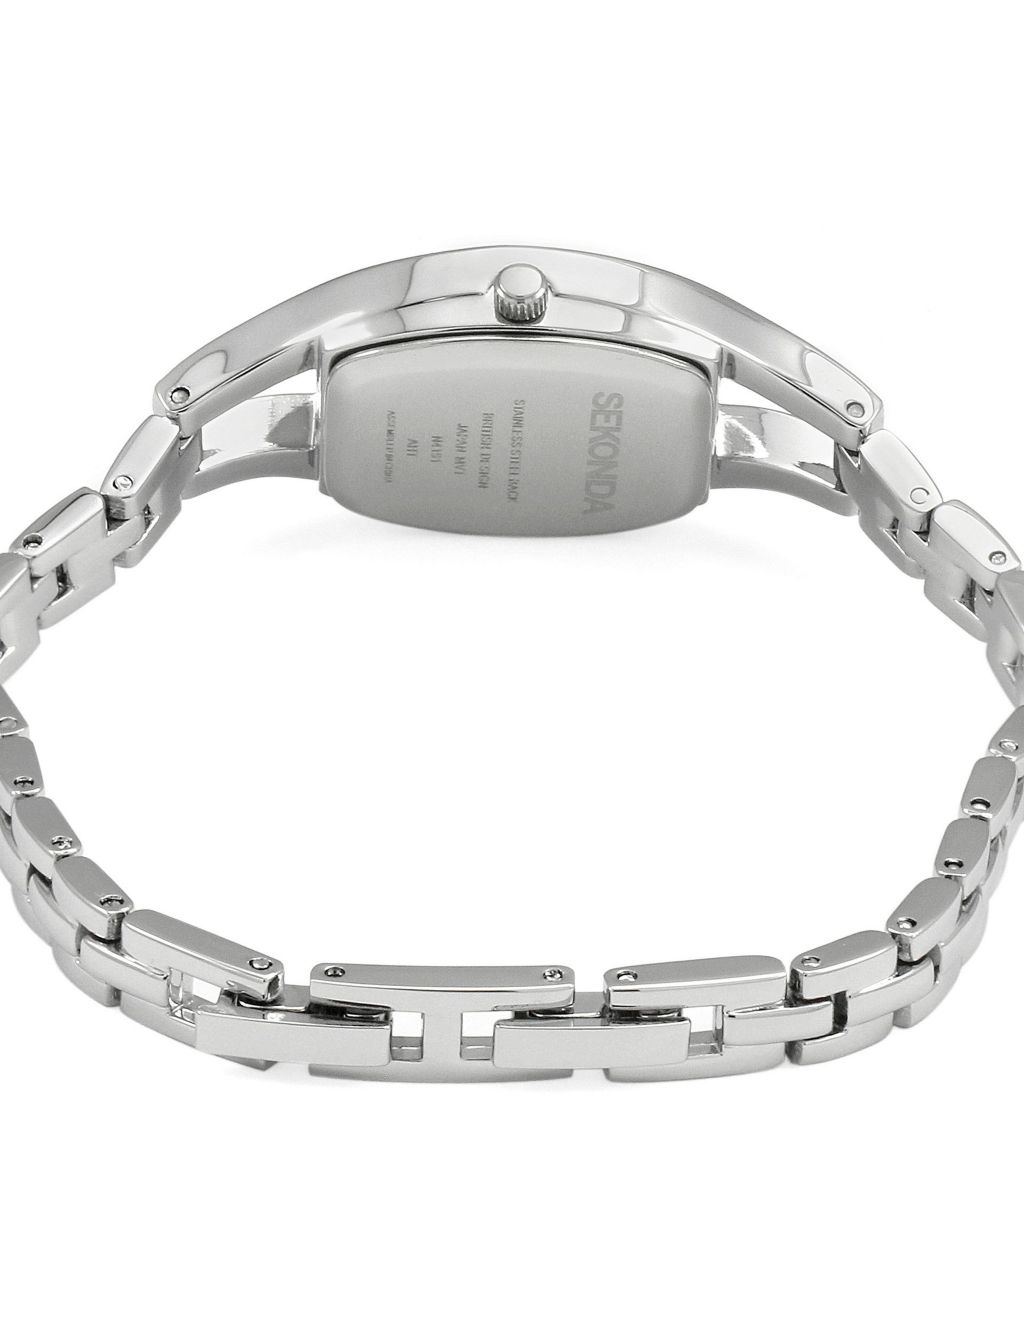 Sekonda Dress Tonneau Silver Watch image 2